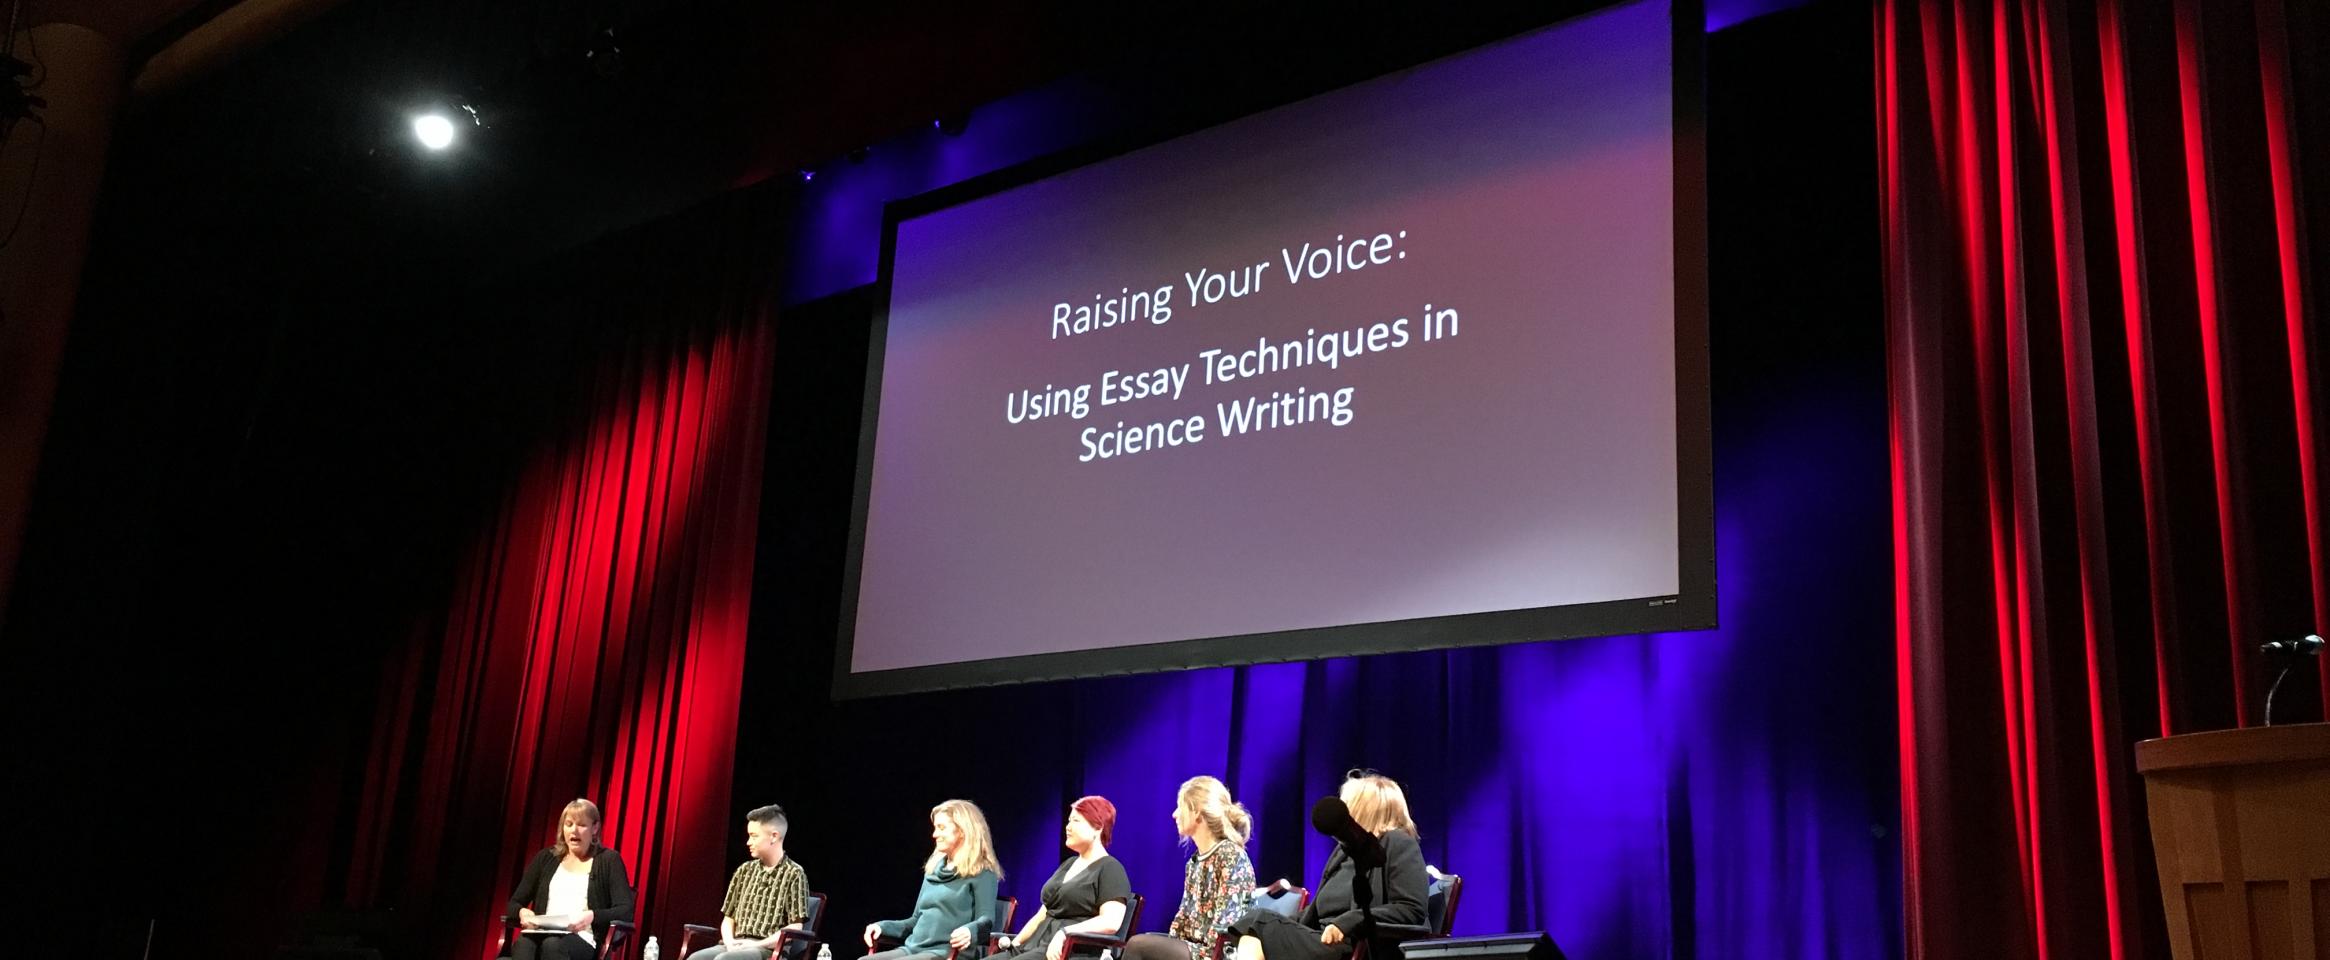 ScienceWriters 2018 panel: Raising your voice